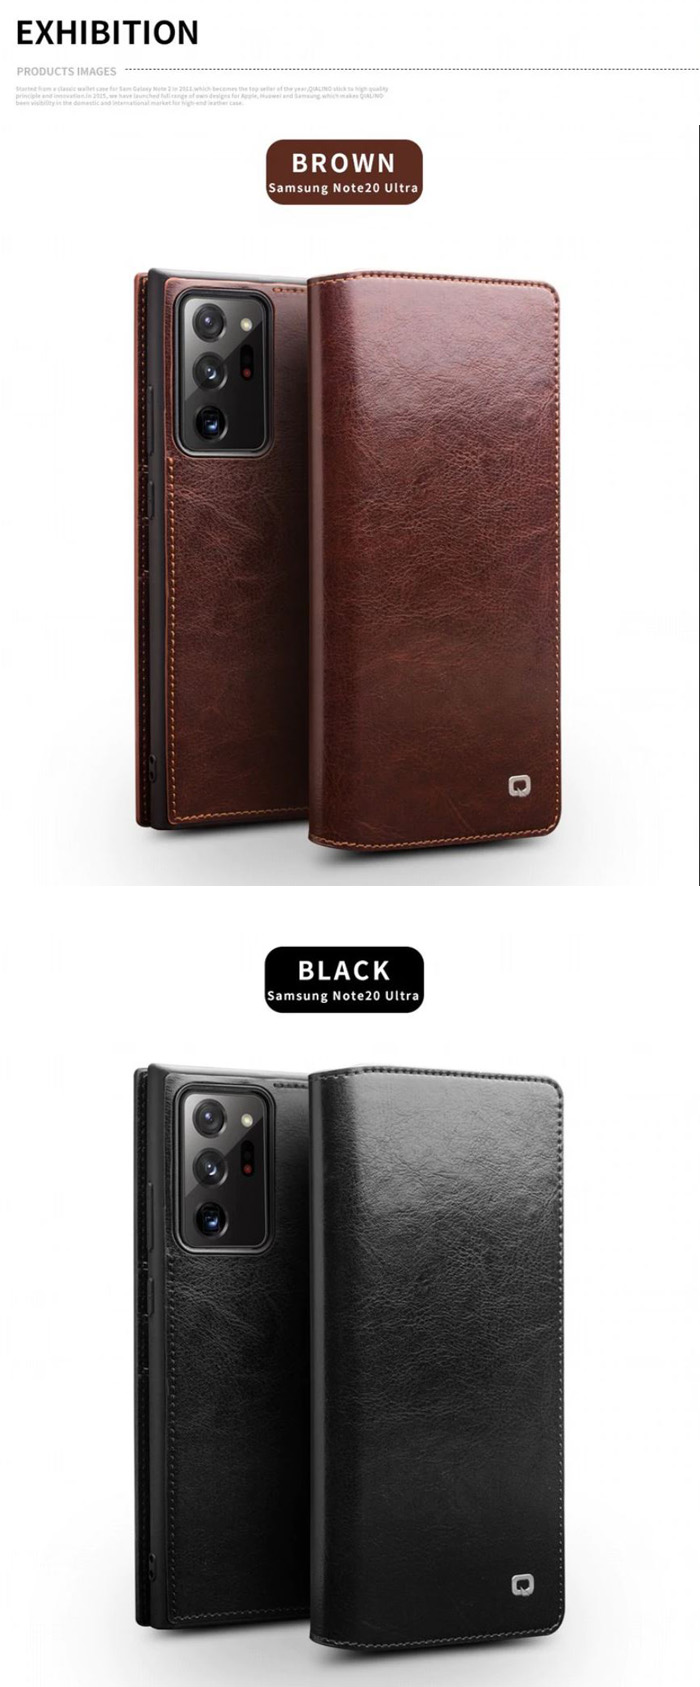 Bao da Note 20 Ultra / Note 20 Ultra 5G Qialino Classic Leather Wallet da thật Hanmade 6